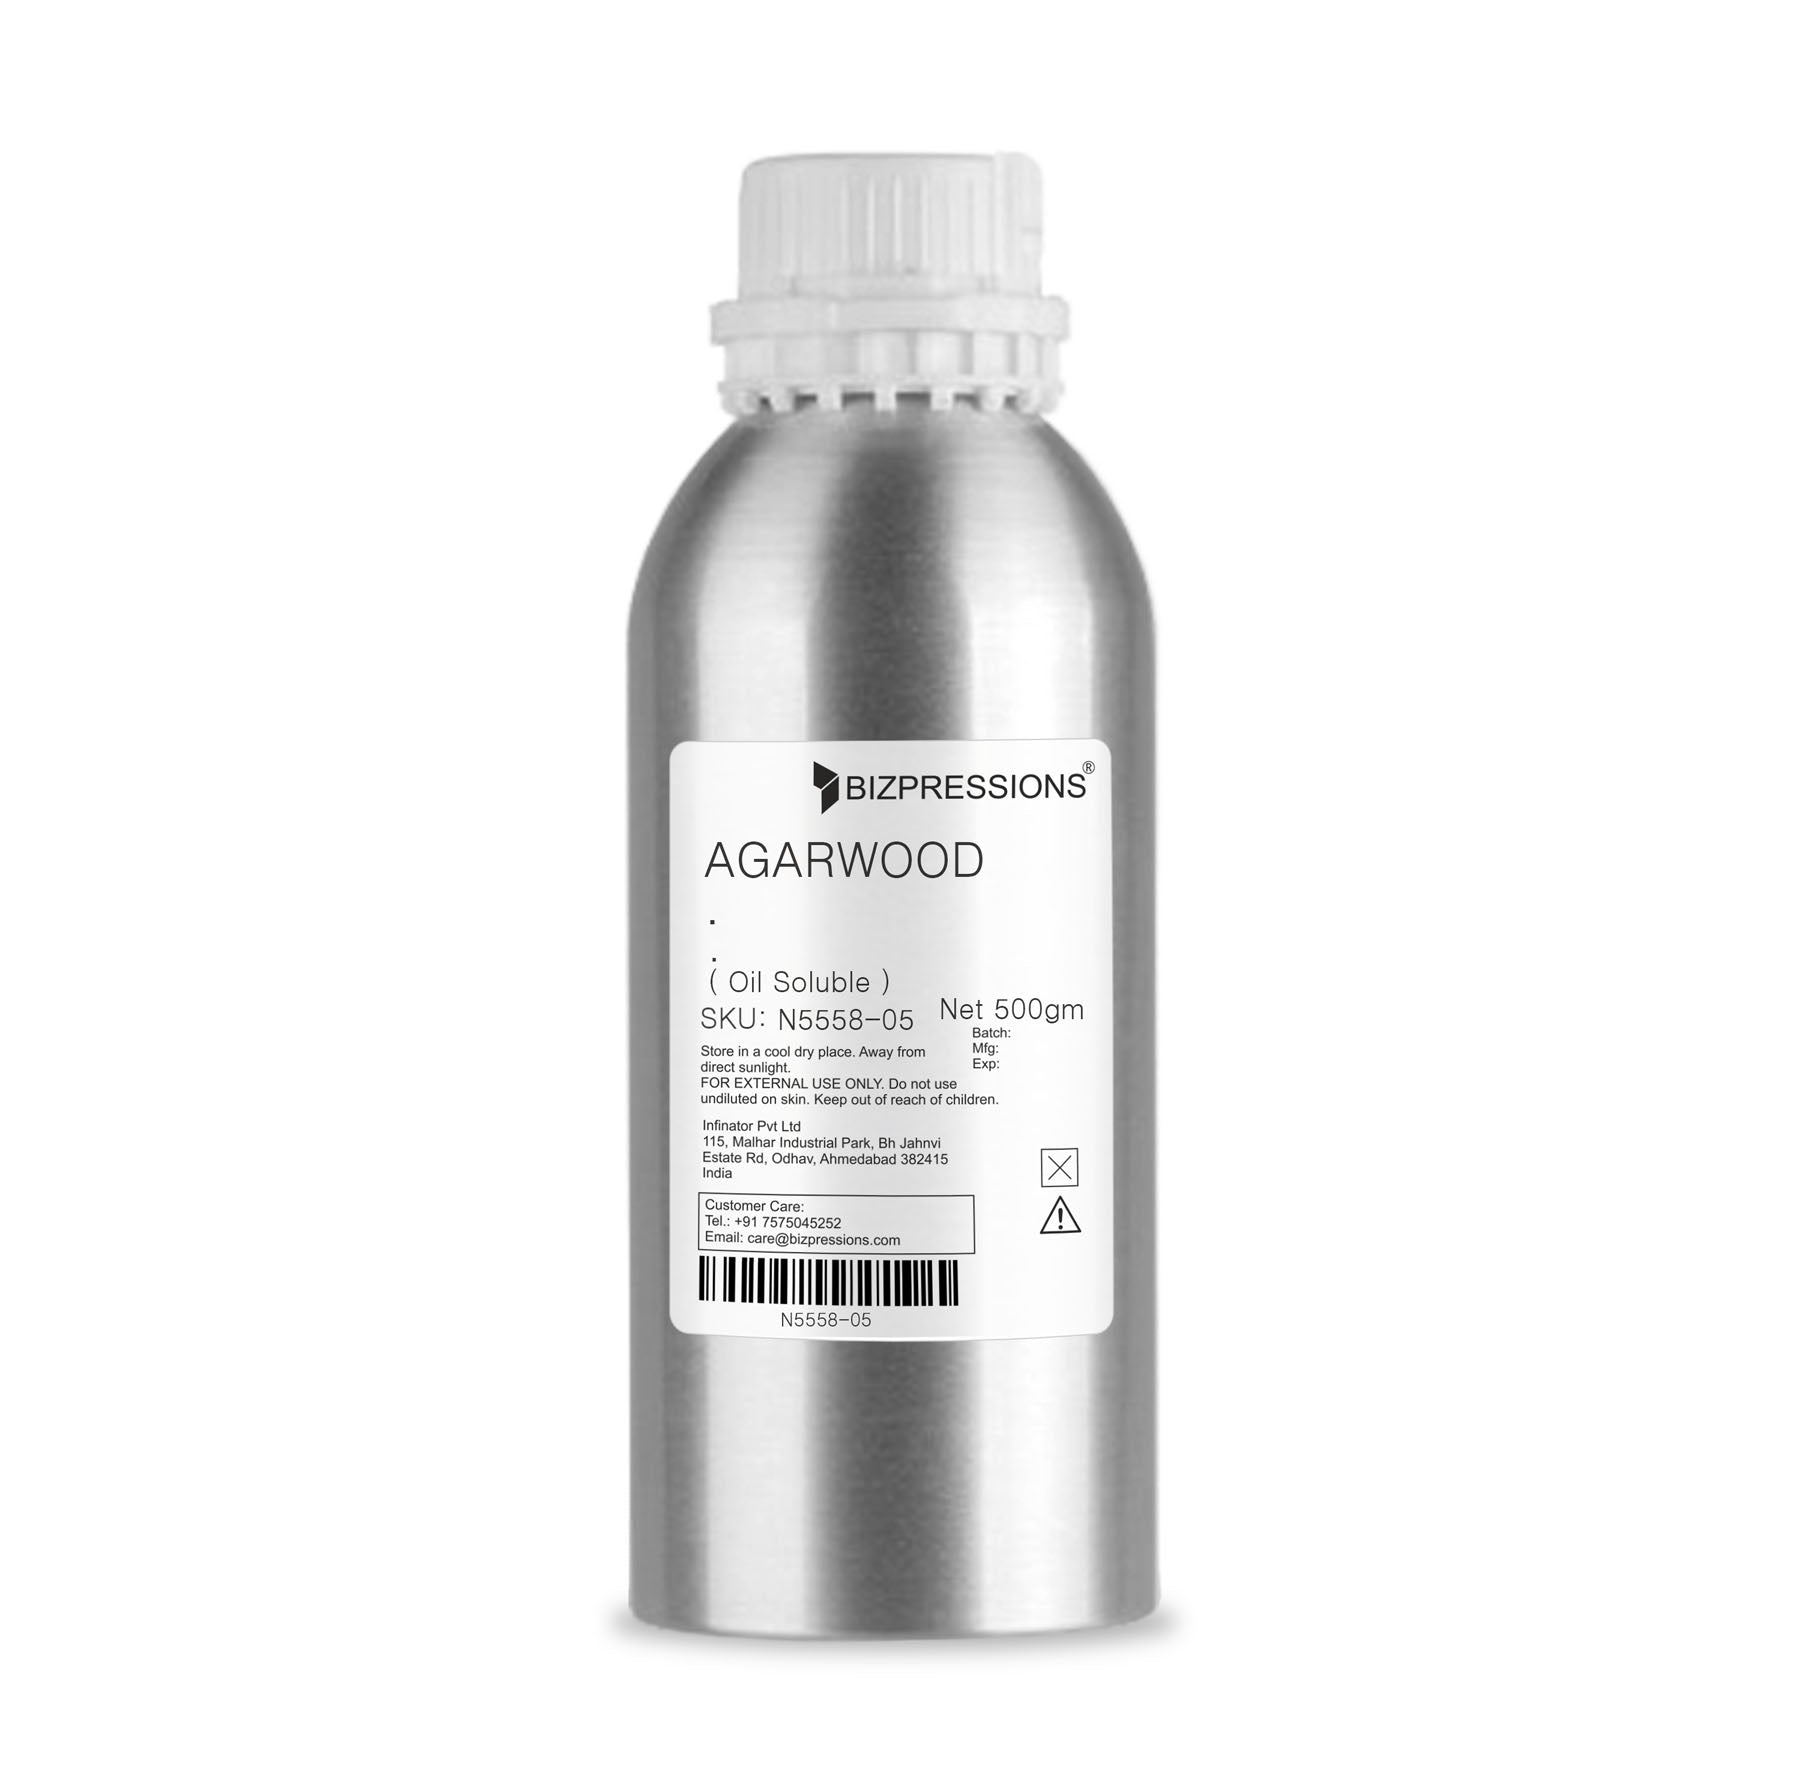 AGARWOOD - Fragrance ( Oil Soluble ) - 500 gm